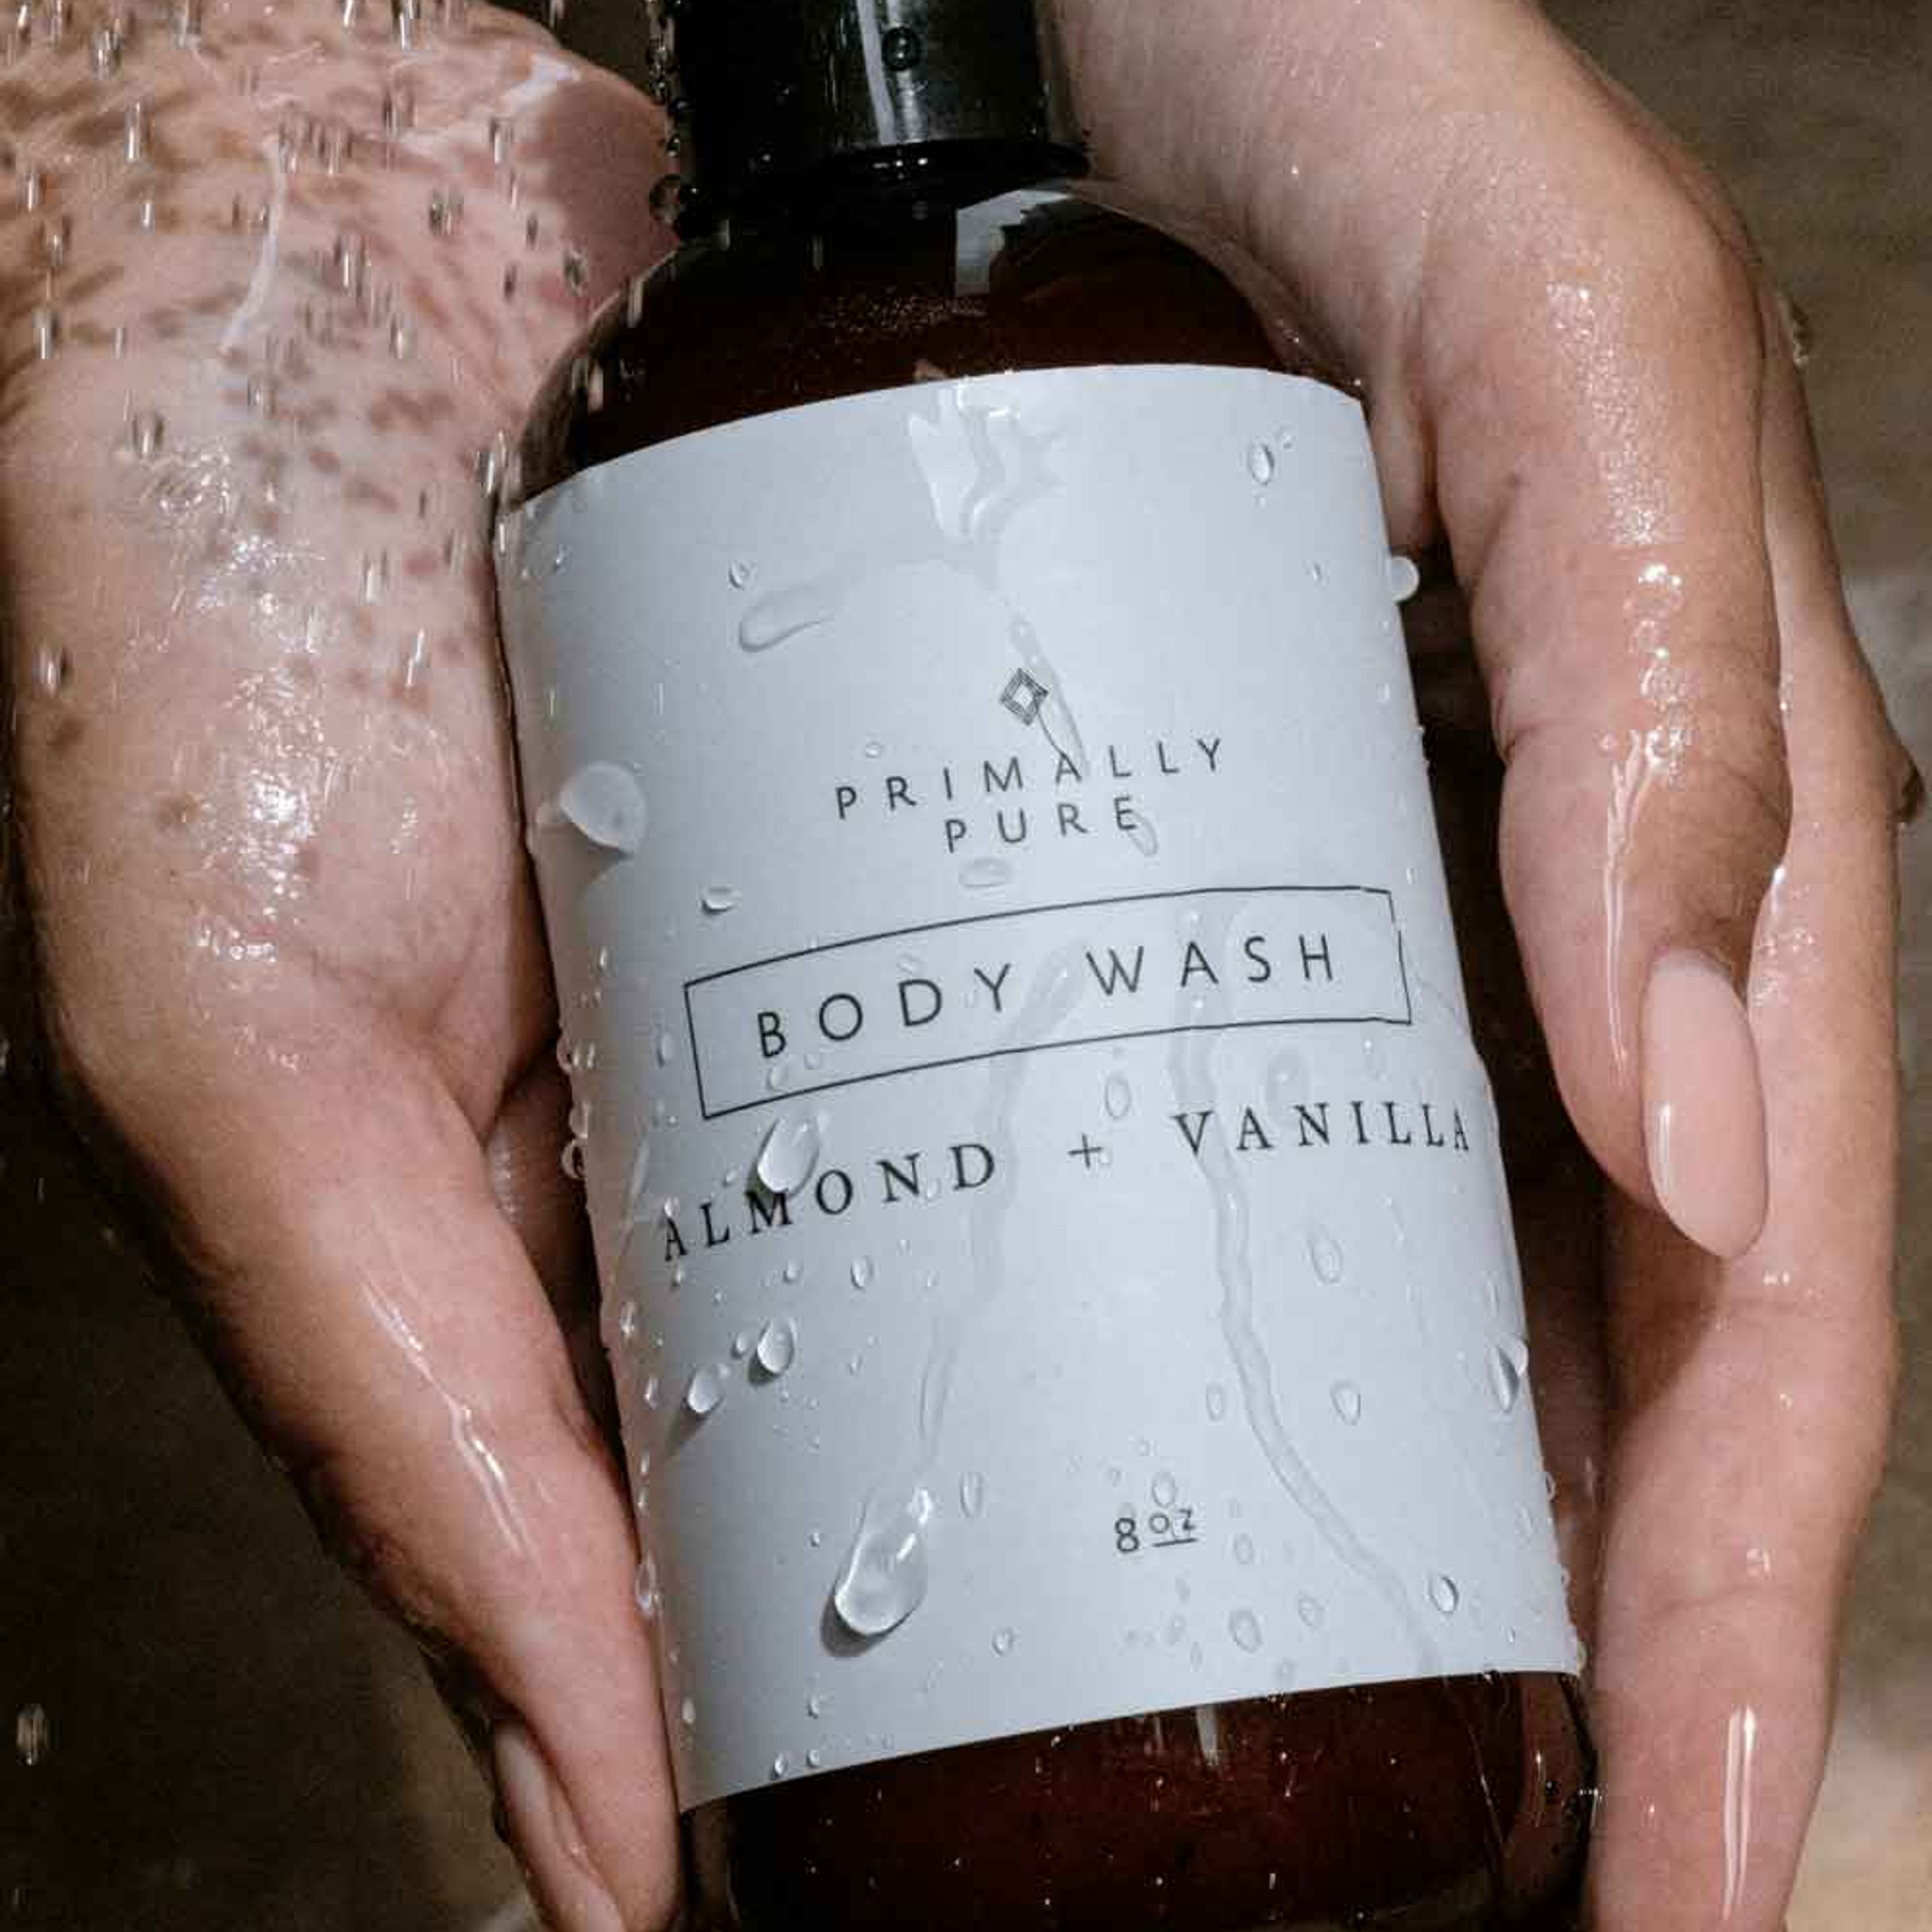 Almond + Vanilla Body Wash